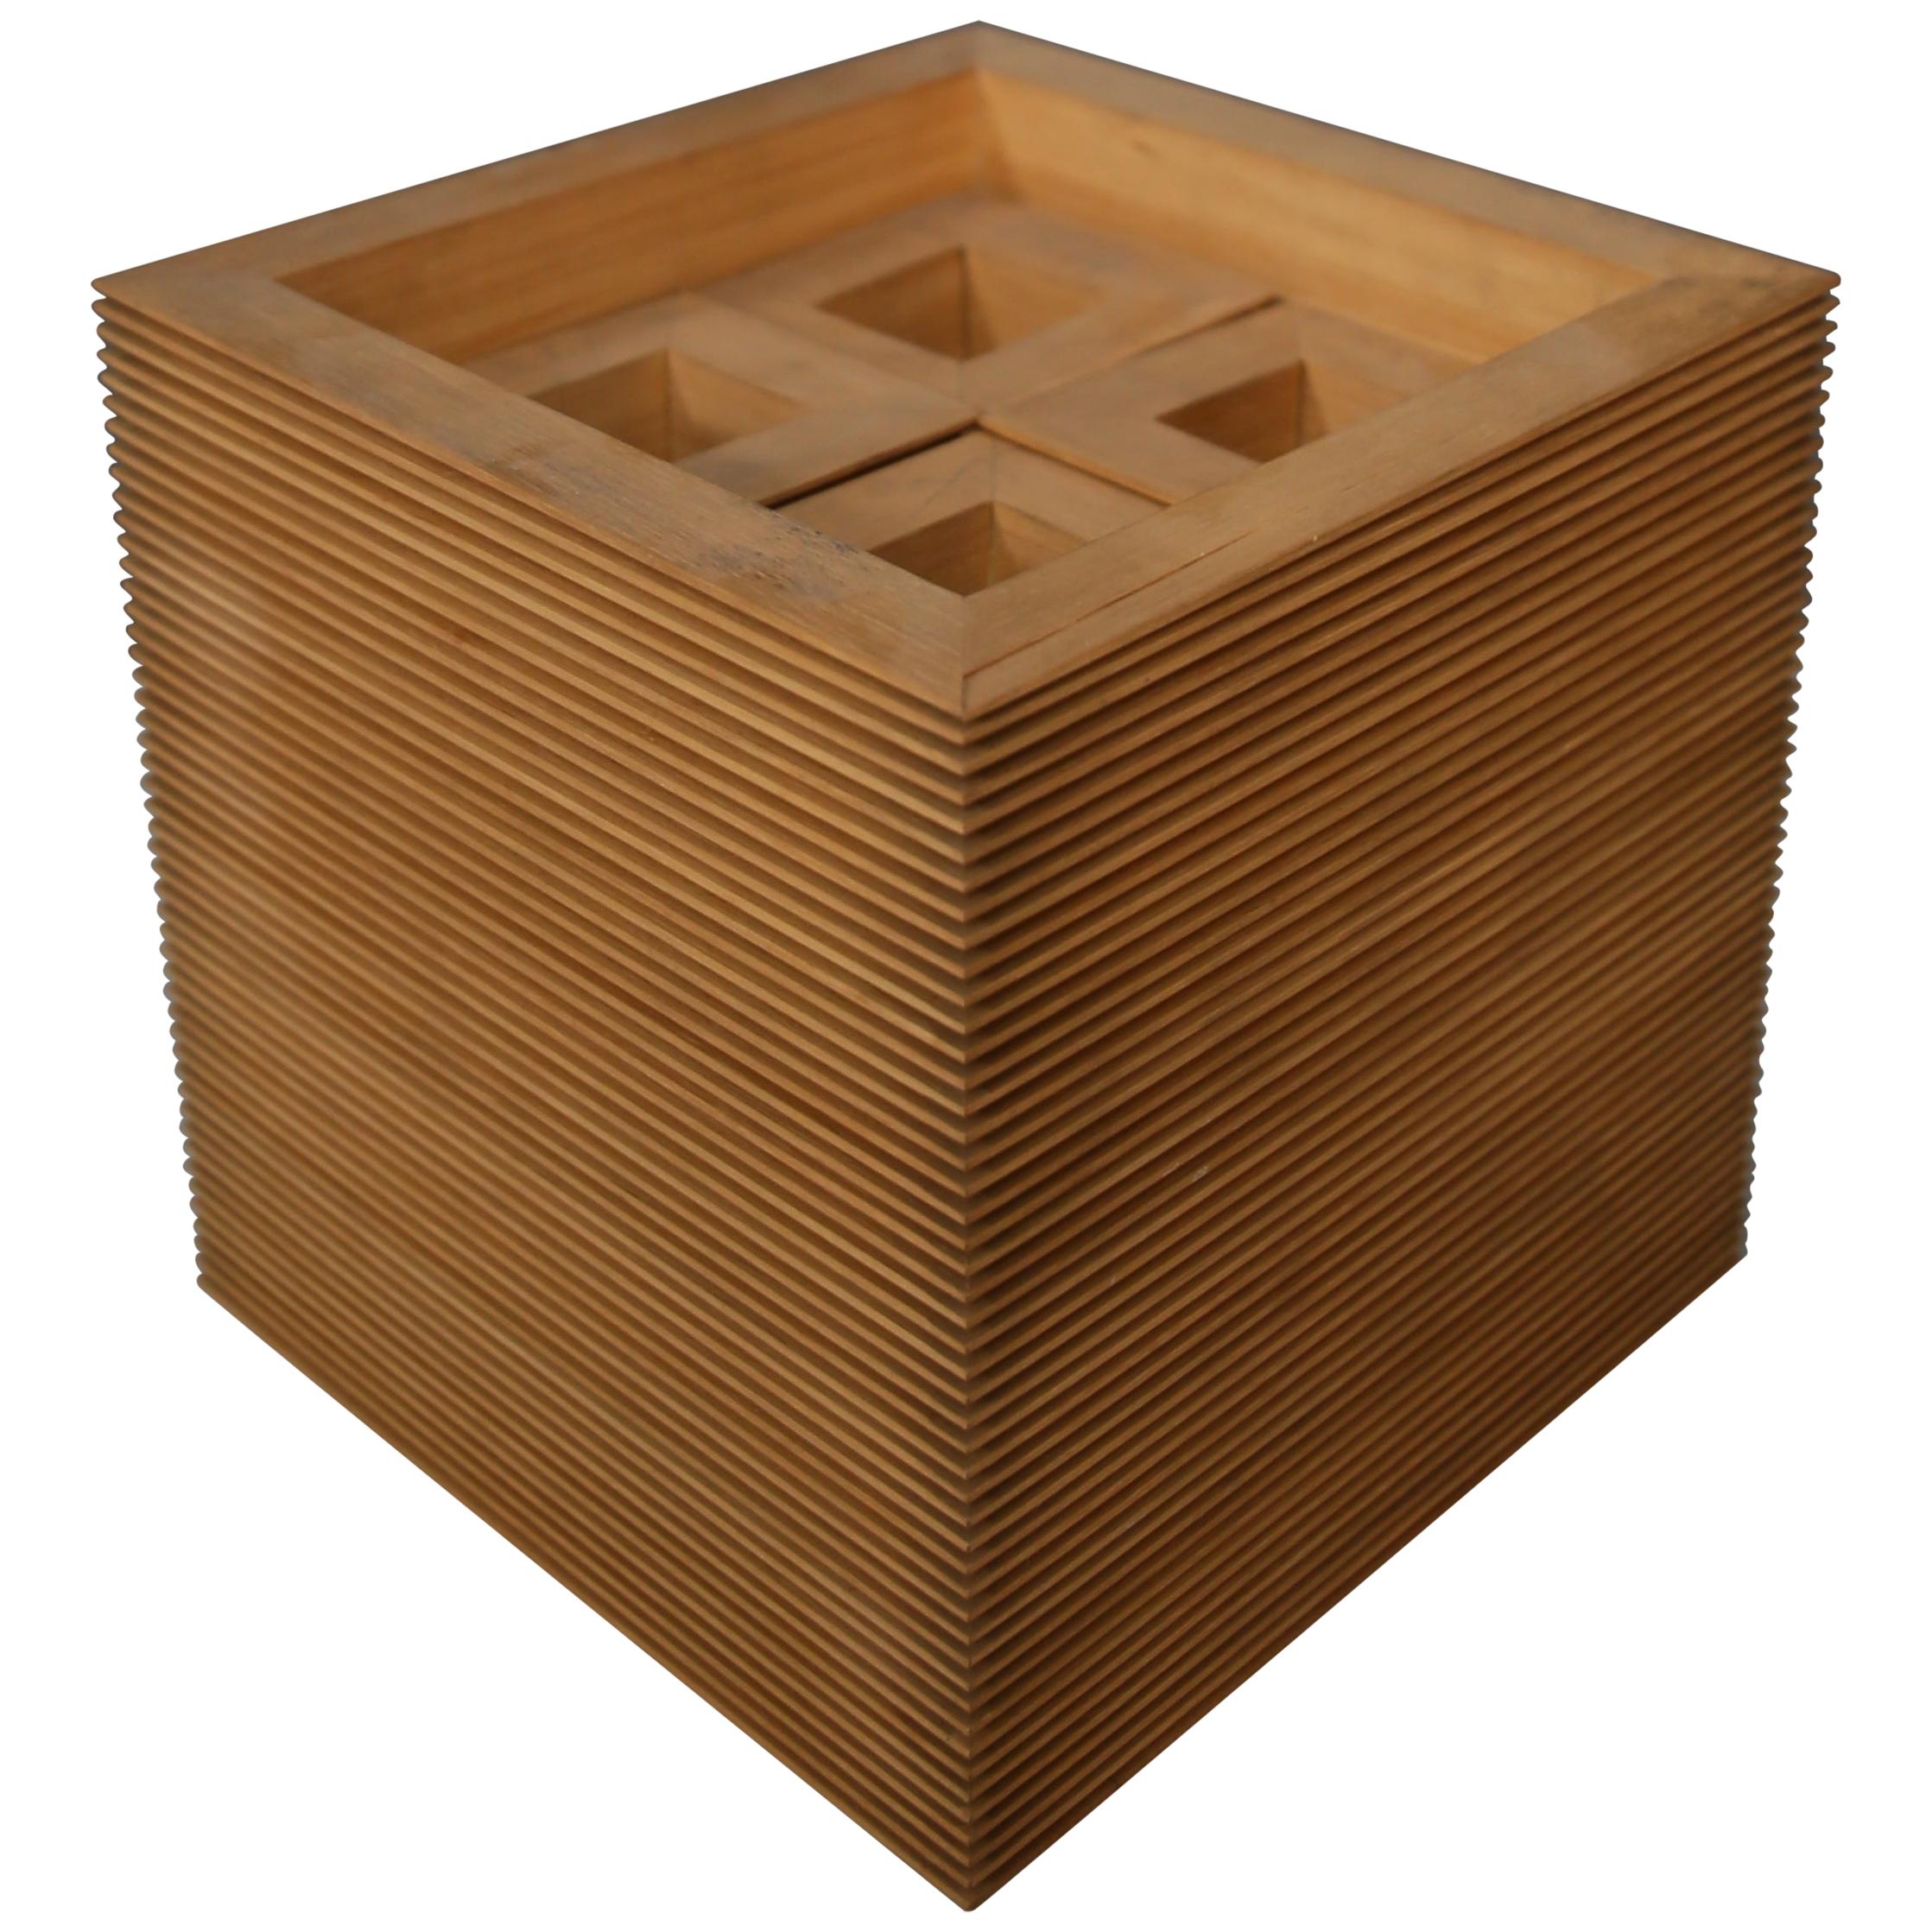 Box of Secrets Designed by Pierluigi Ghianda "The Poet of Wood"